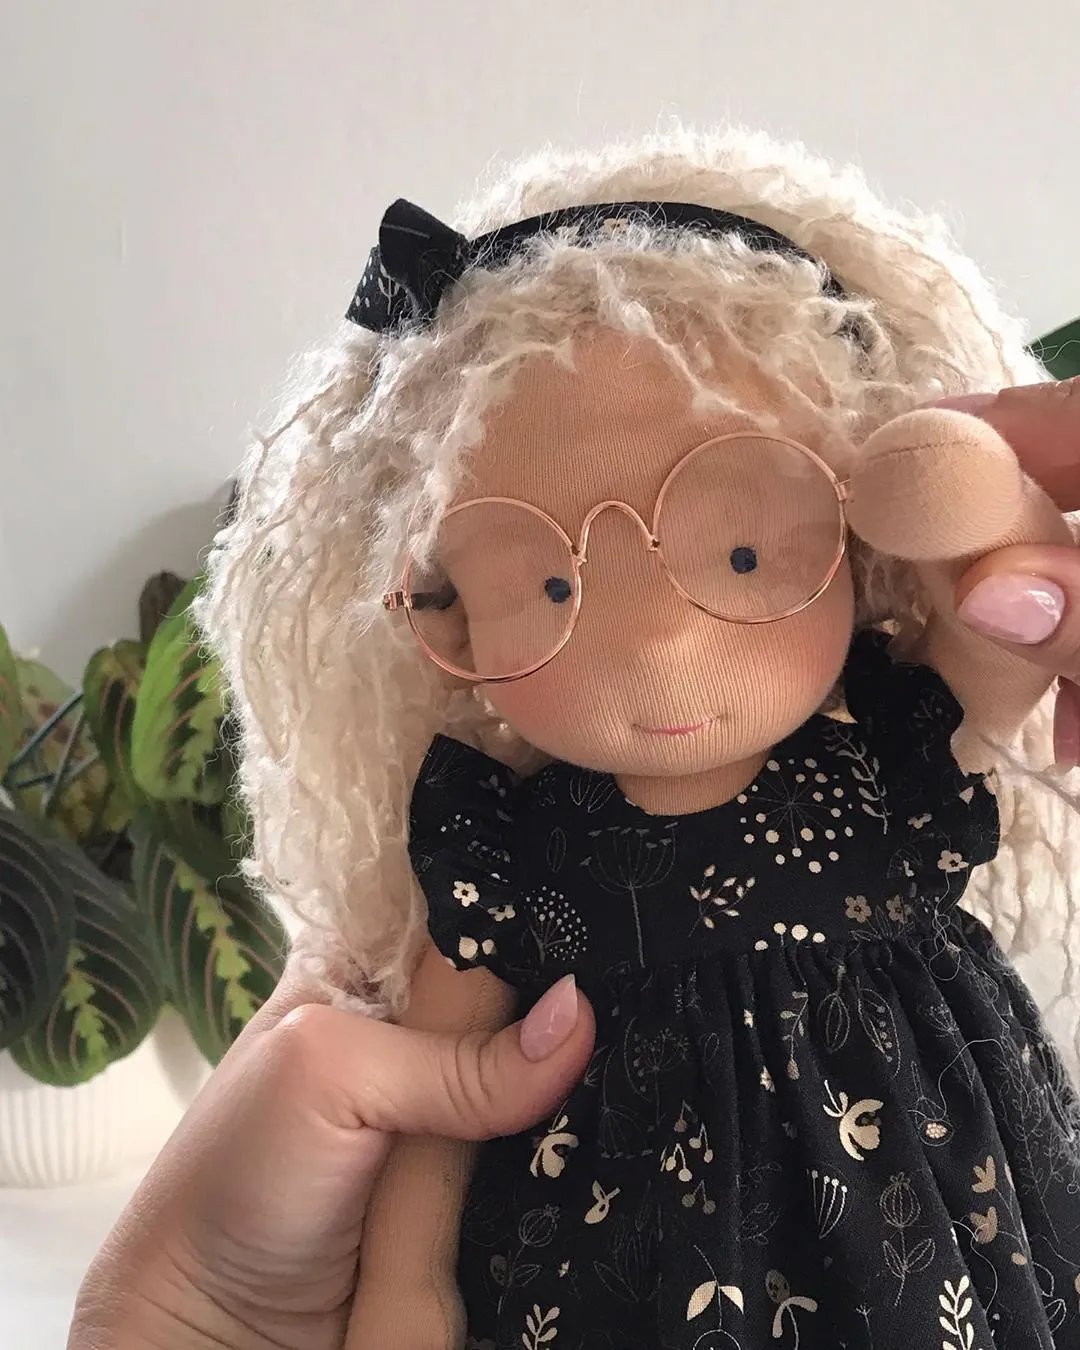 (New)Handmade Waldorf Doll - Laura